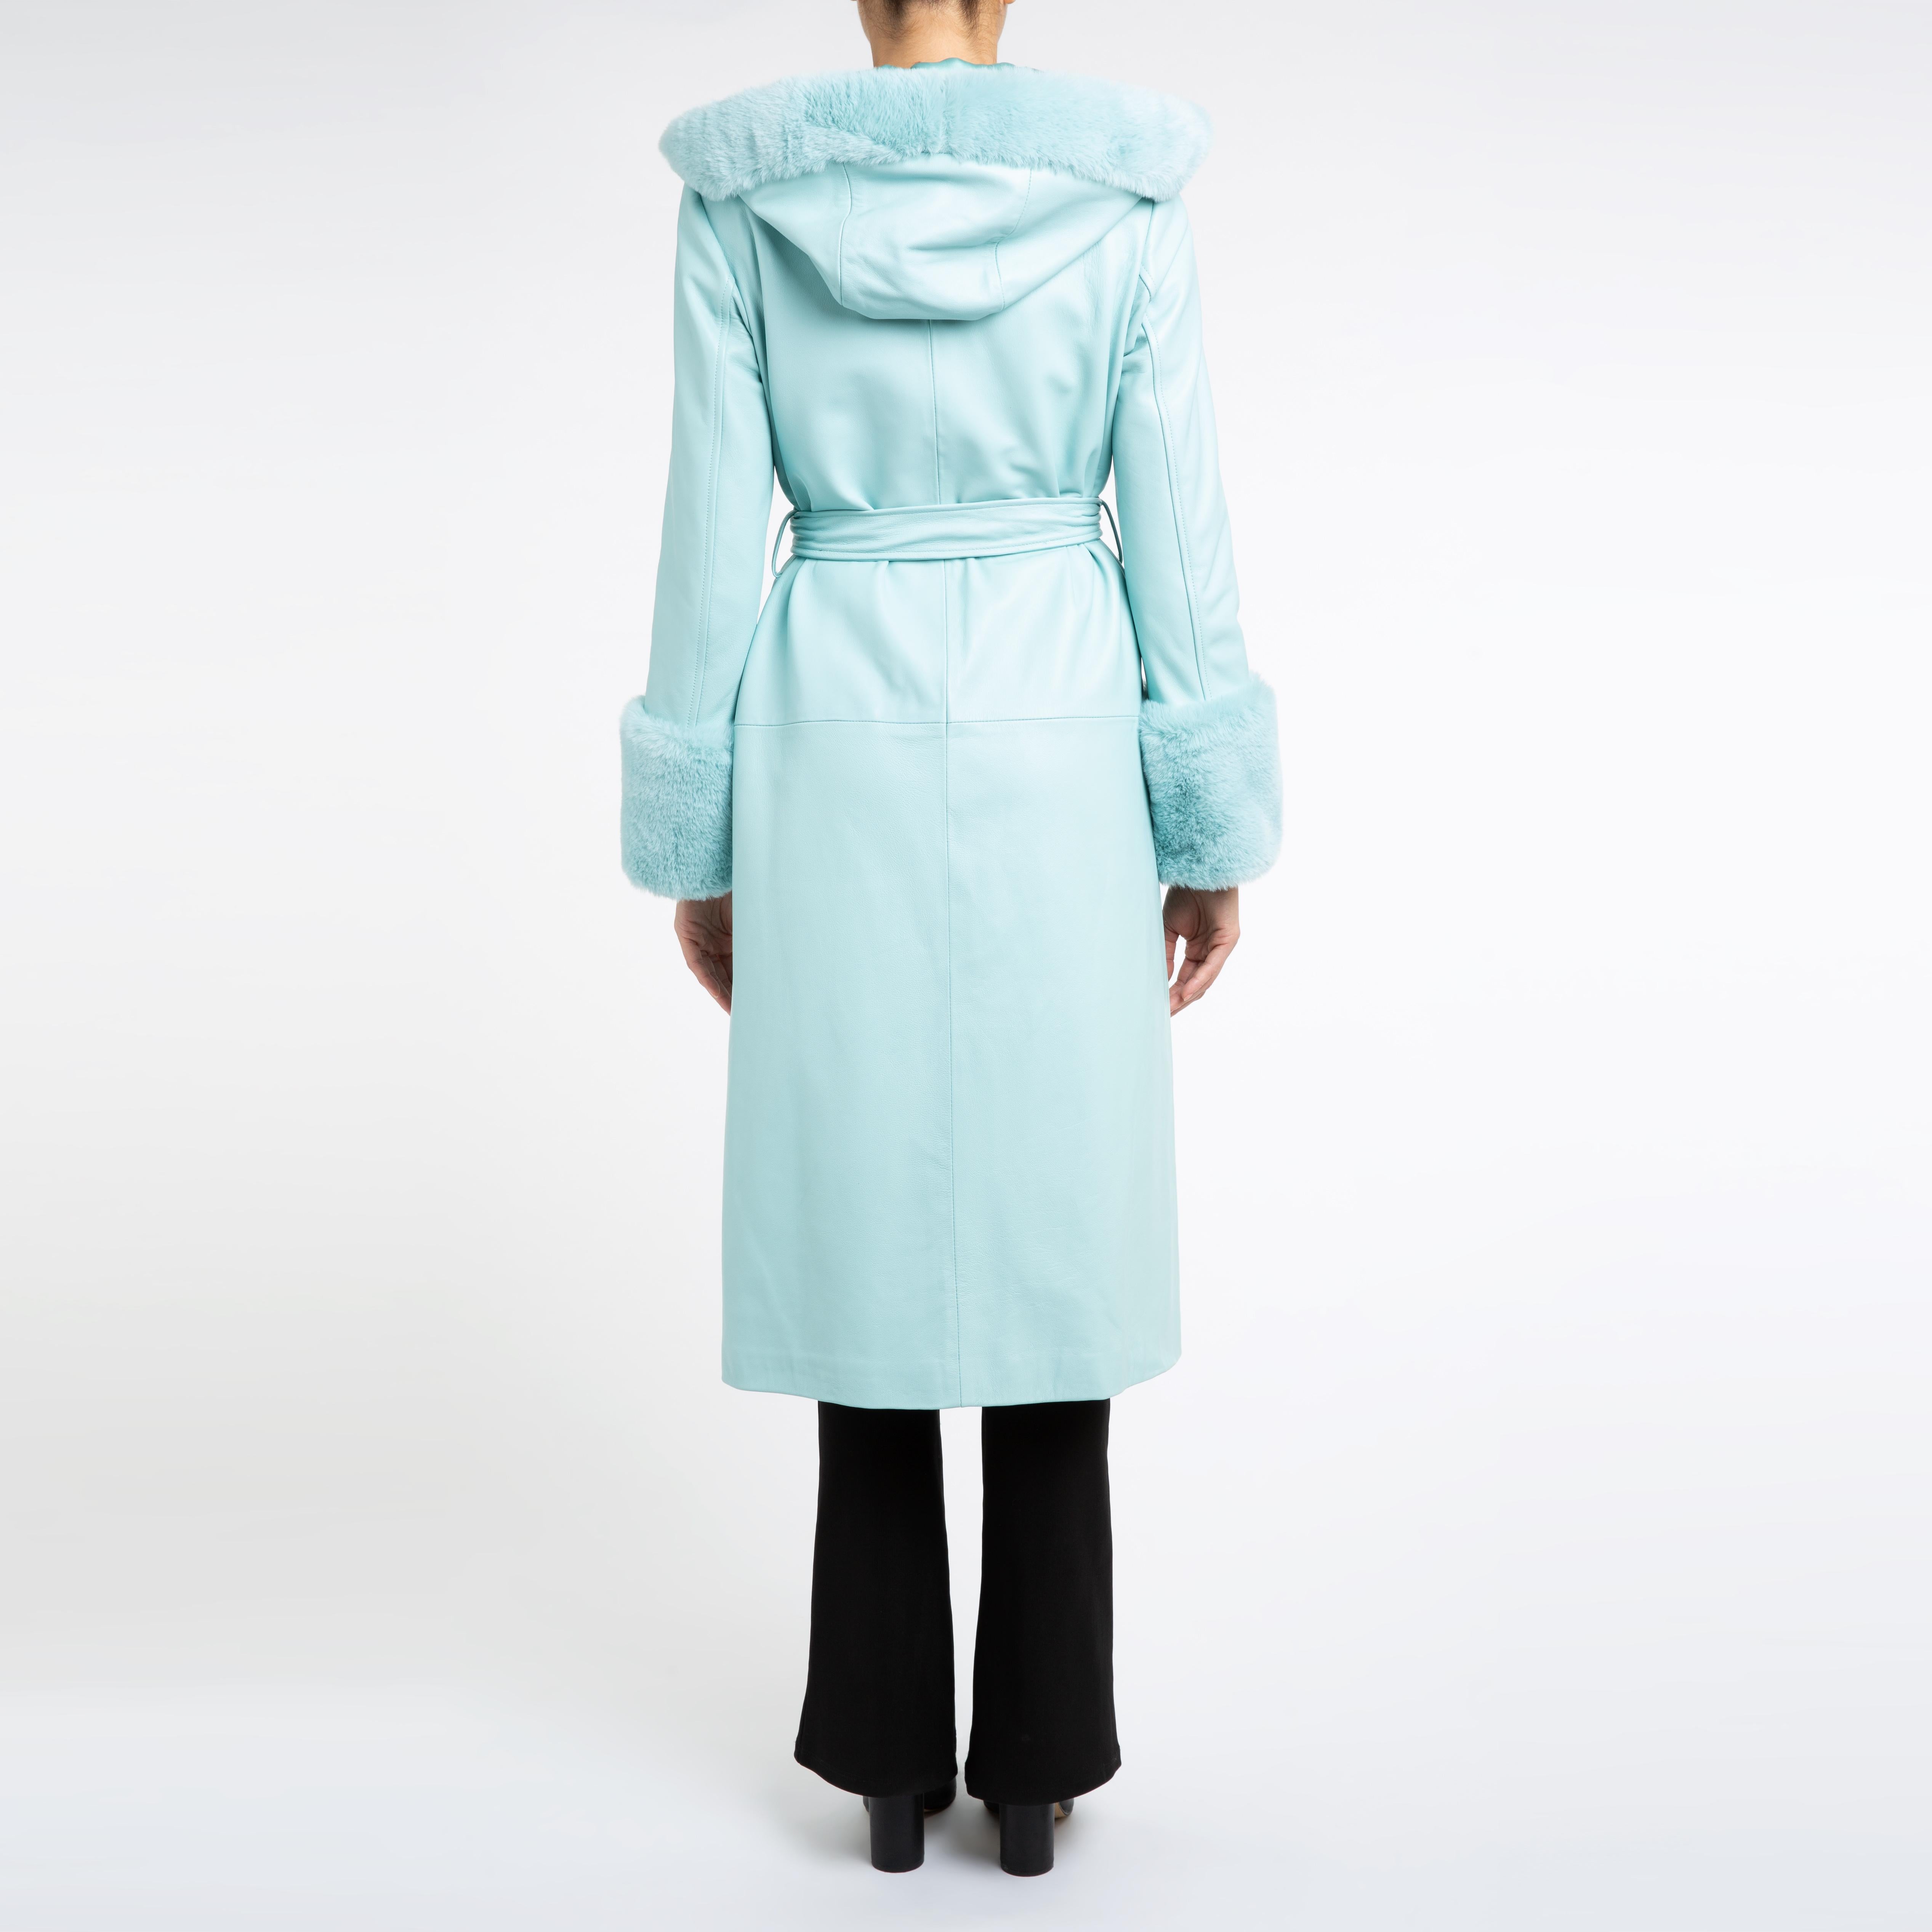 Verheyen London Hooded Leather Coat in Blue Aquamarine & Faux Fur - Size uk 14 For Sale 1